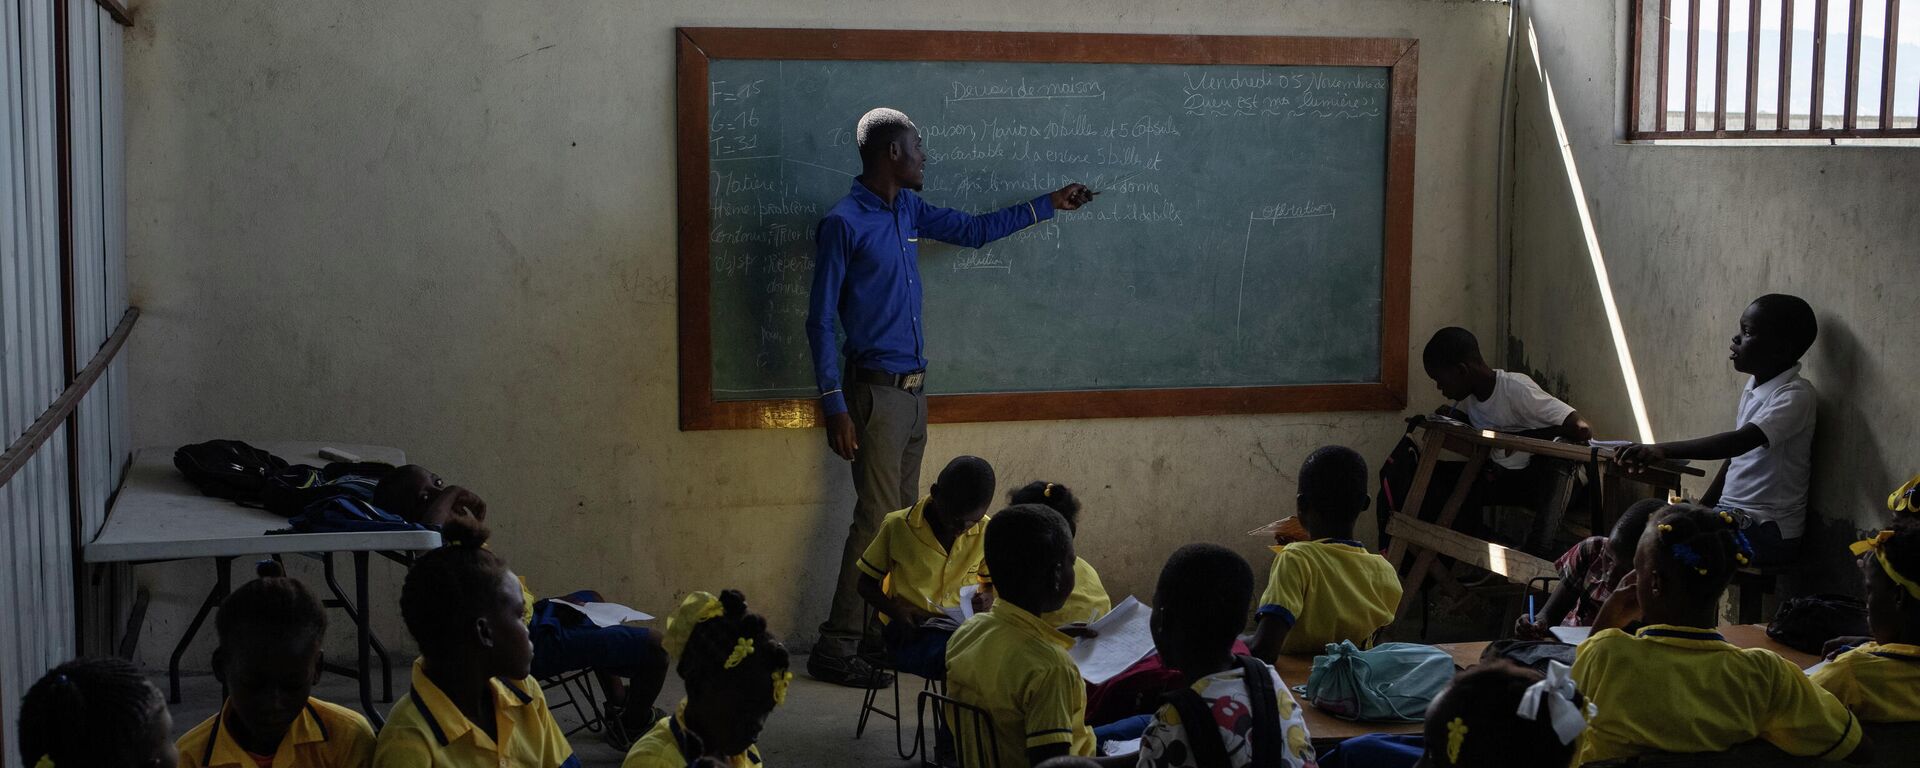 Un maestro imparte clases para los alumnos en la Escuela St Mary de Famille Kizito ubicada en Cite Soleil, Port-au-Prince, Haití  - Sputnik Mundo, 1920, 07.12.2021